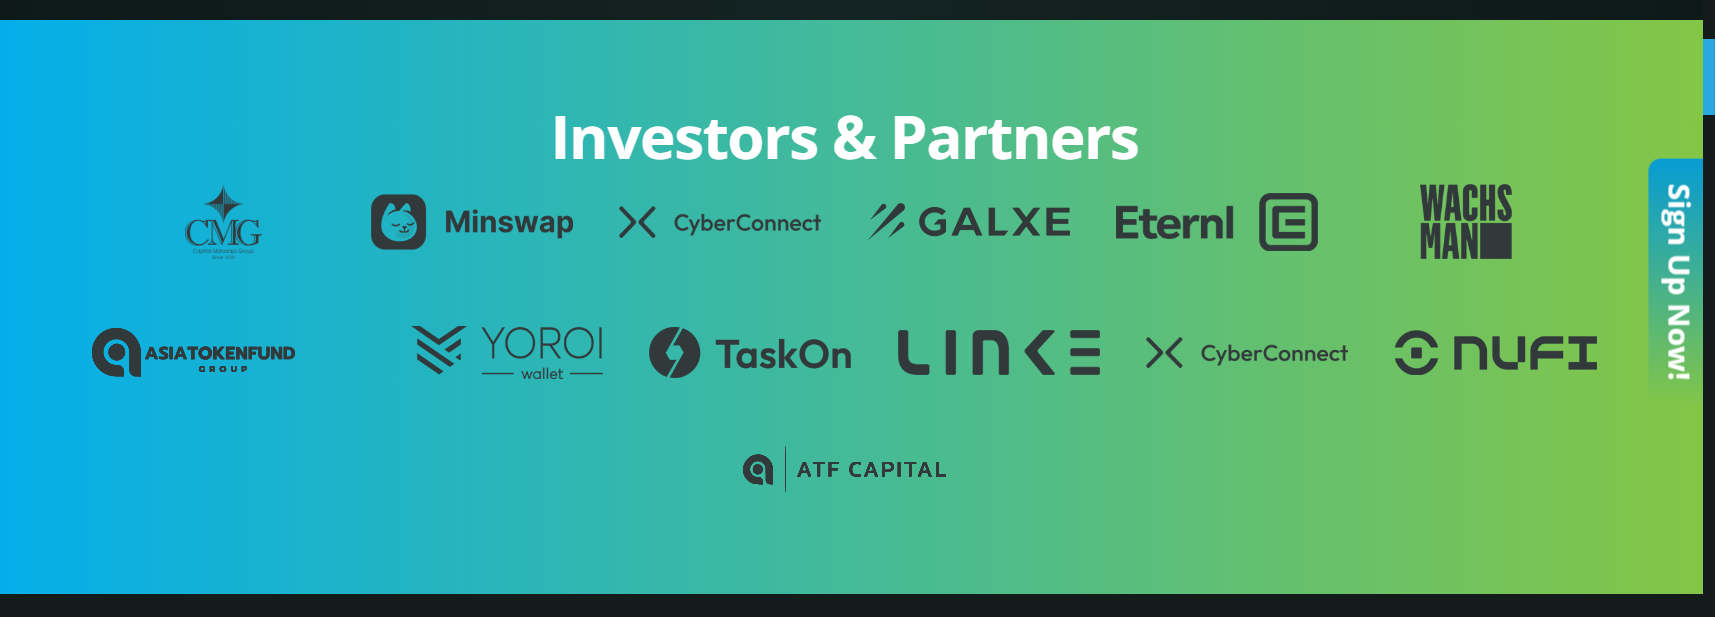 eTukTuk project partners and investors